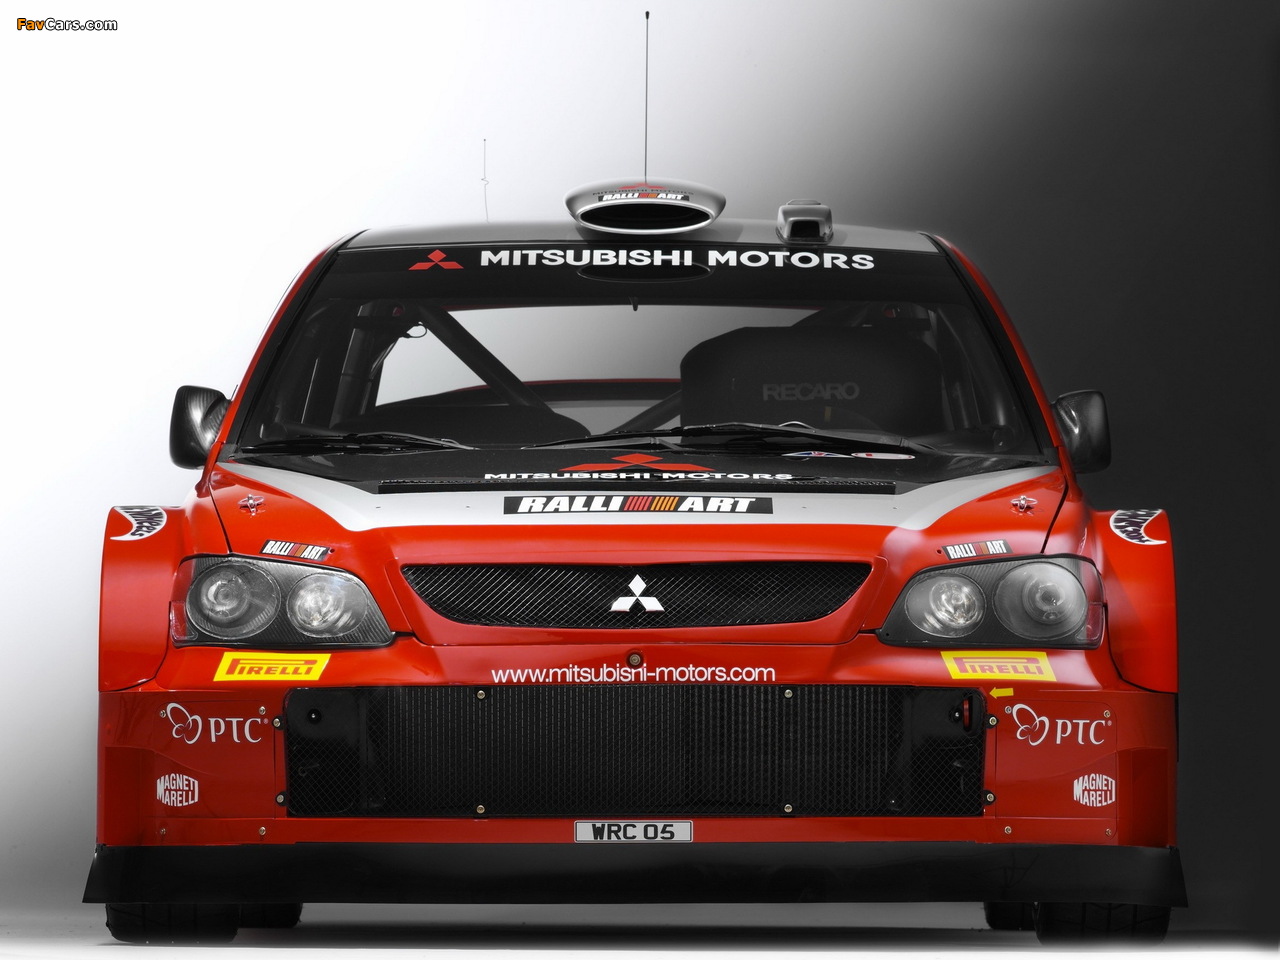 Mitsubishi Lancer WRC05 2005 photos (1280 x 960)